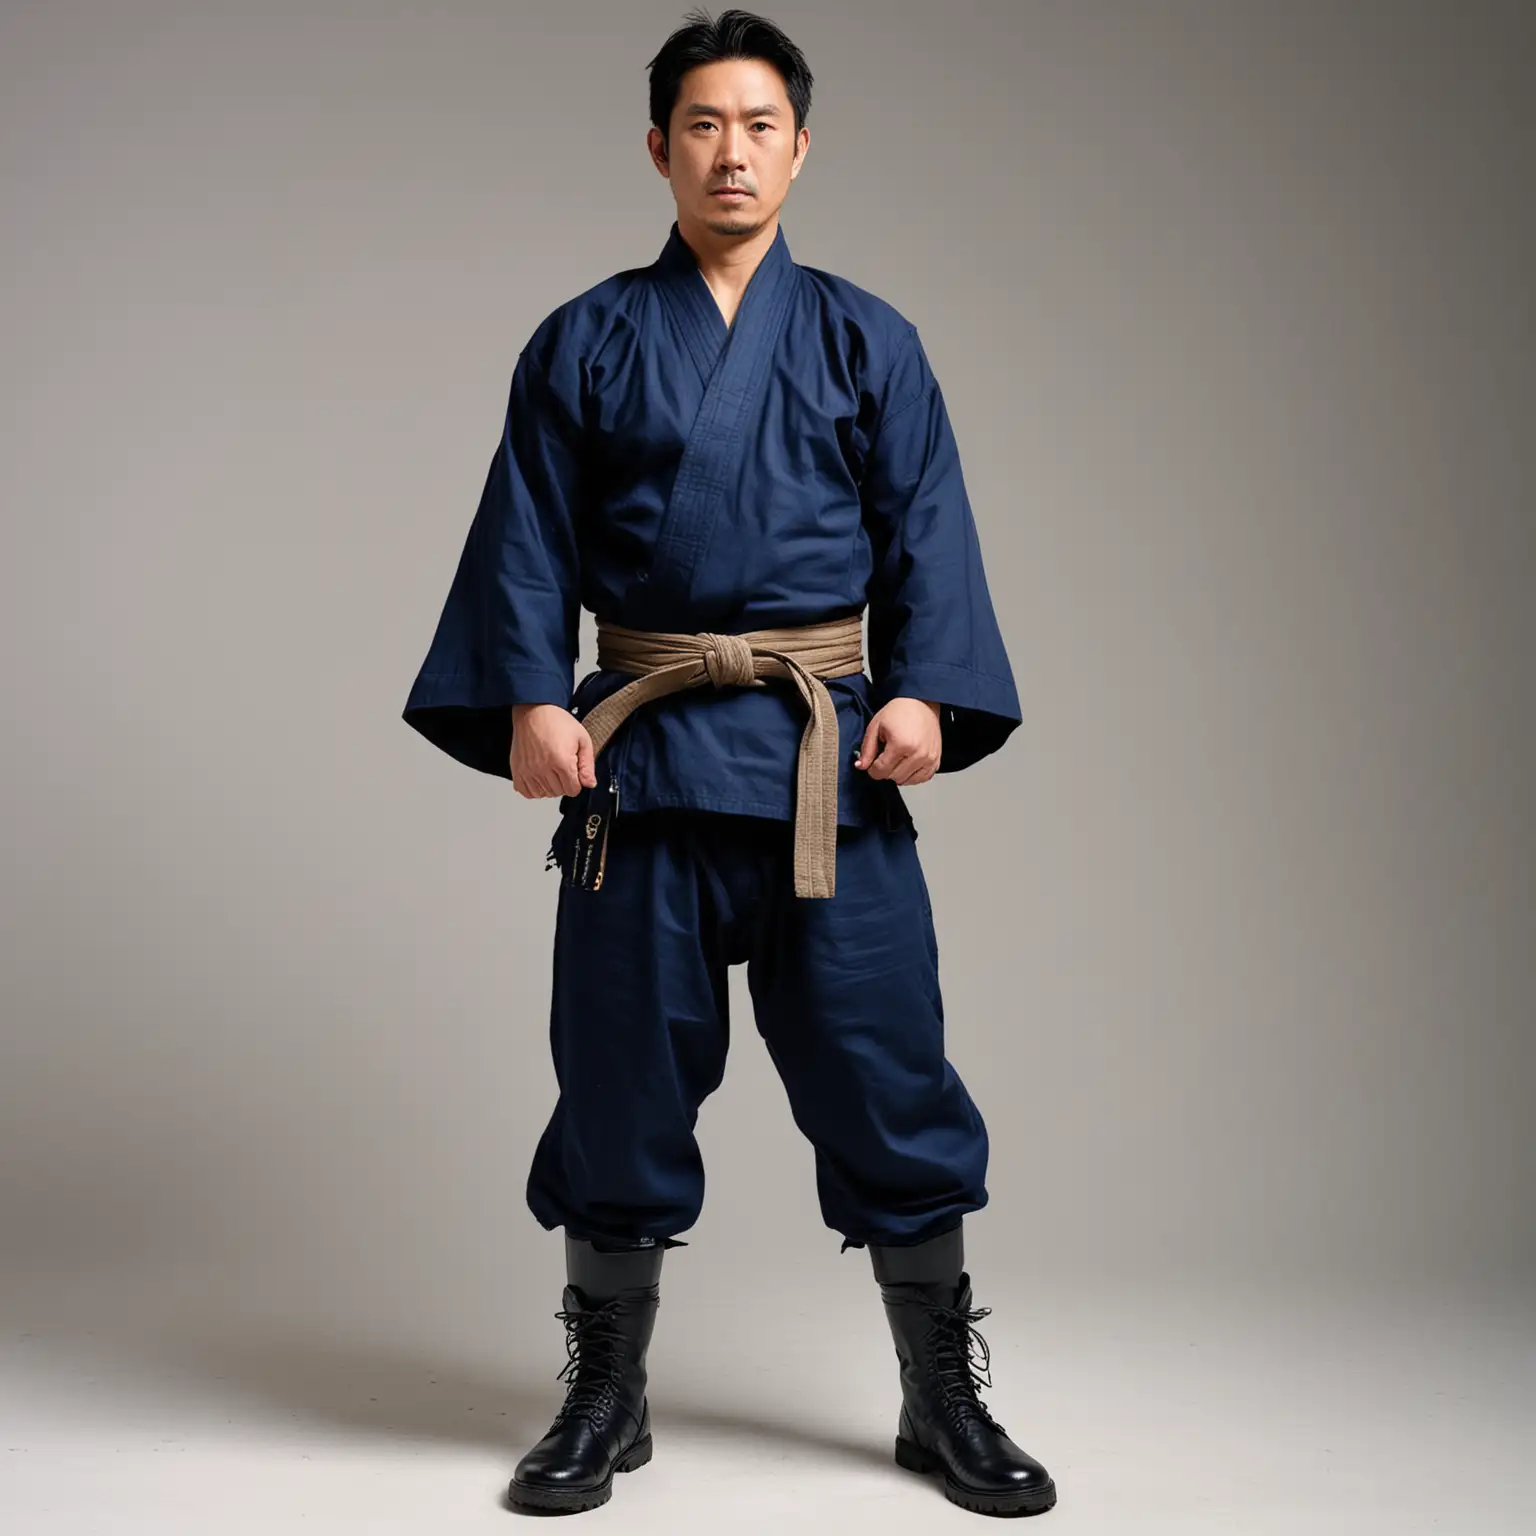 Heroic Japanese Samurai in Saturated Dark Blue Karate Gi and Cape